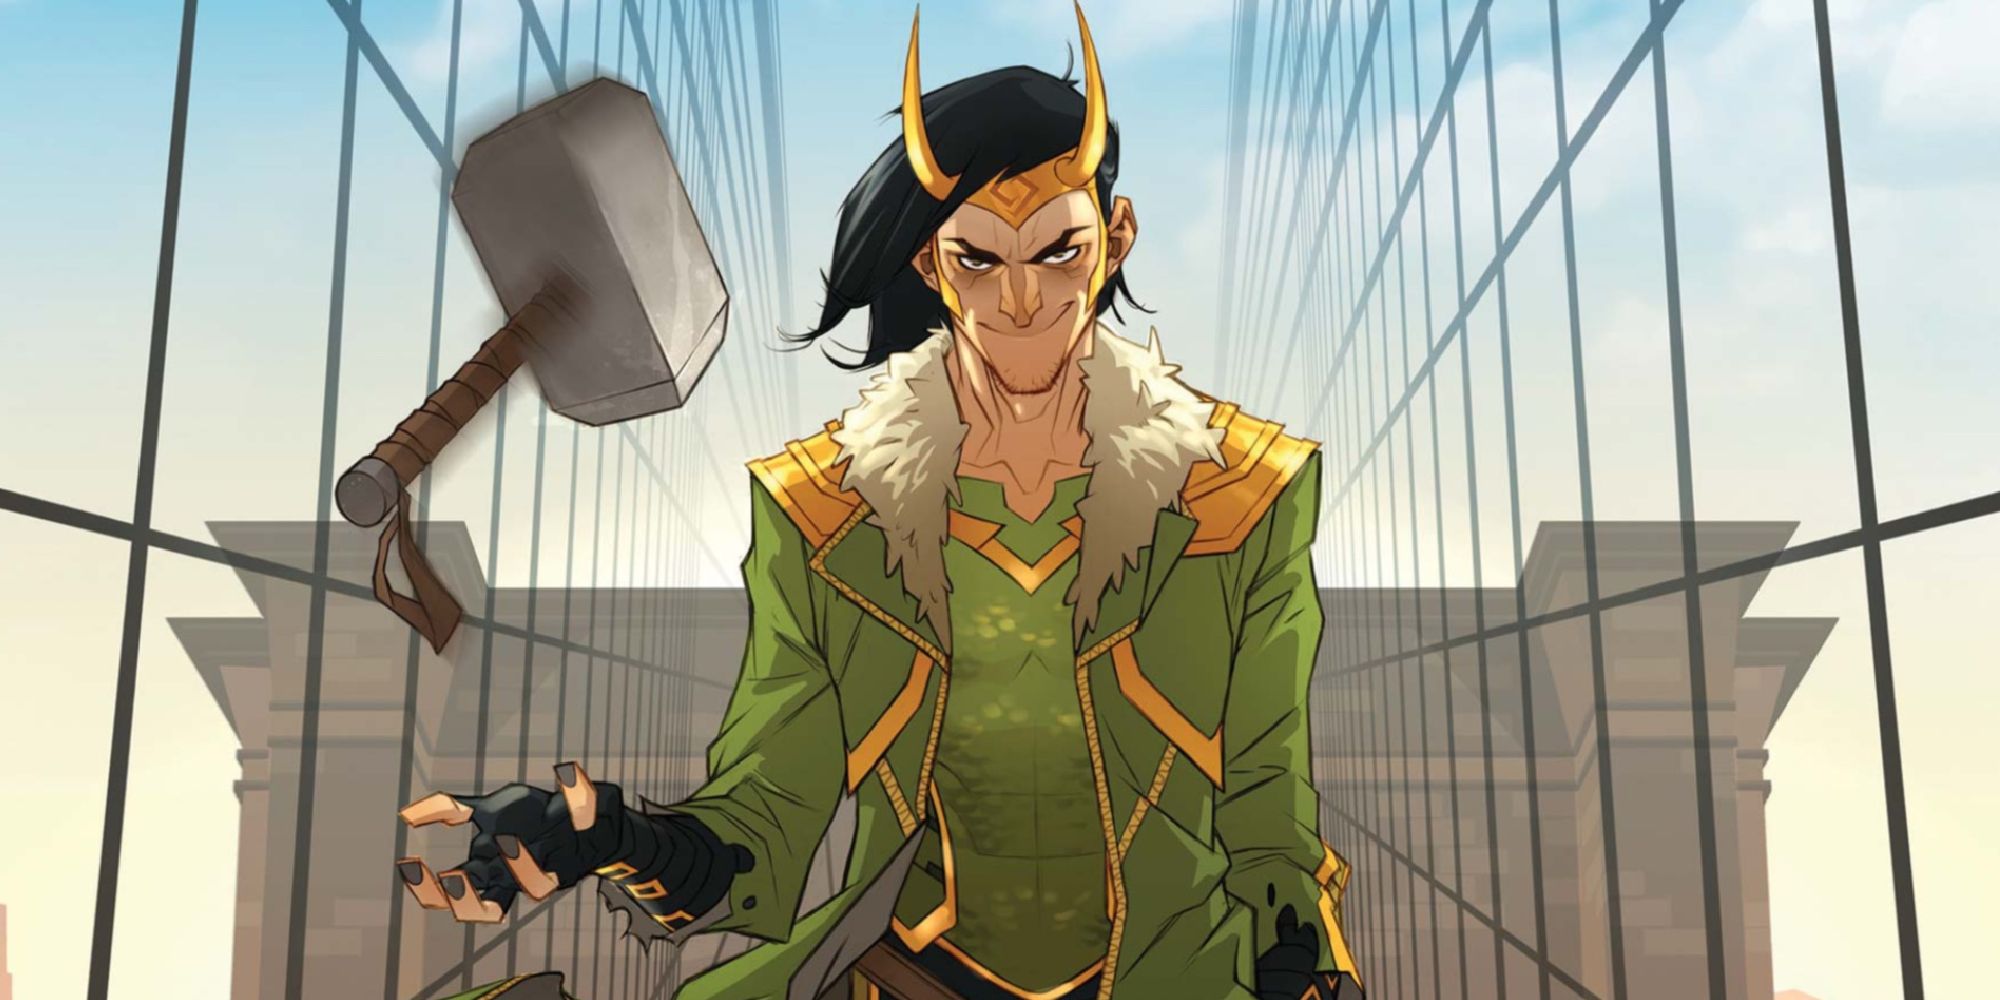 Loki walking across a bridge smiling and tossing Mjolnir